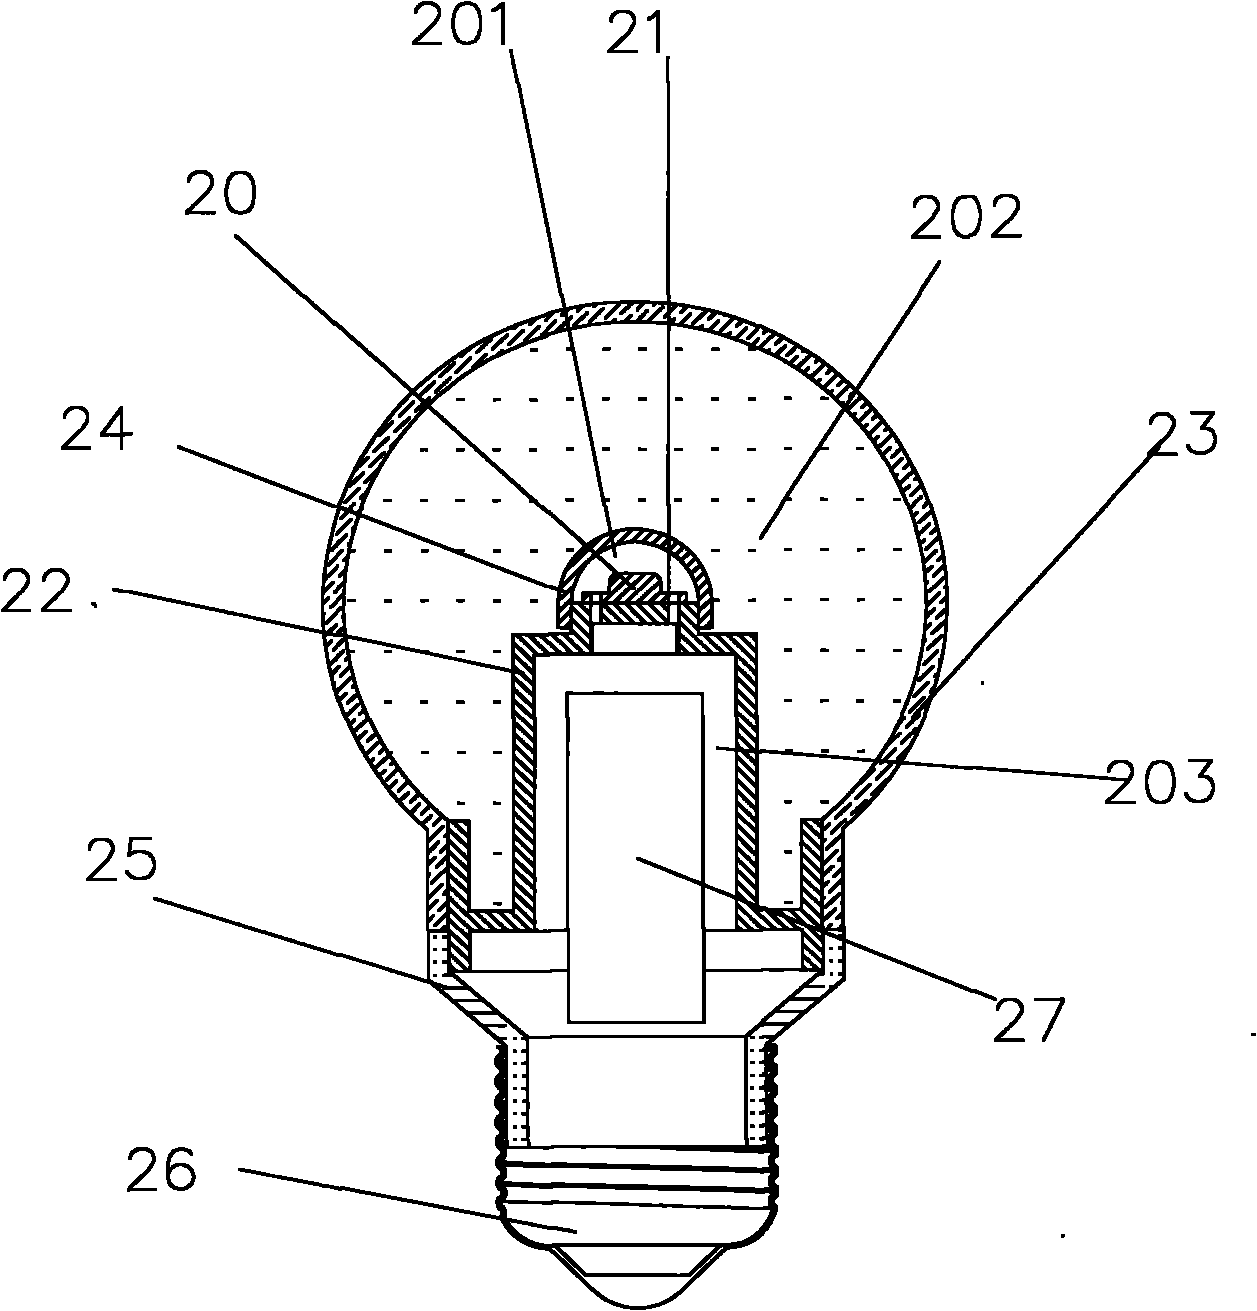 Hollow liquid-cooled light-emitting diode (LED) lamp